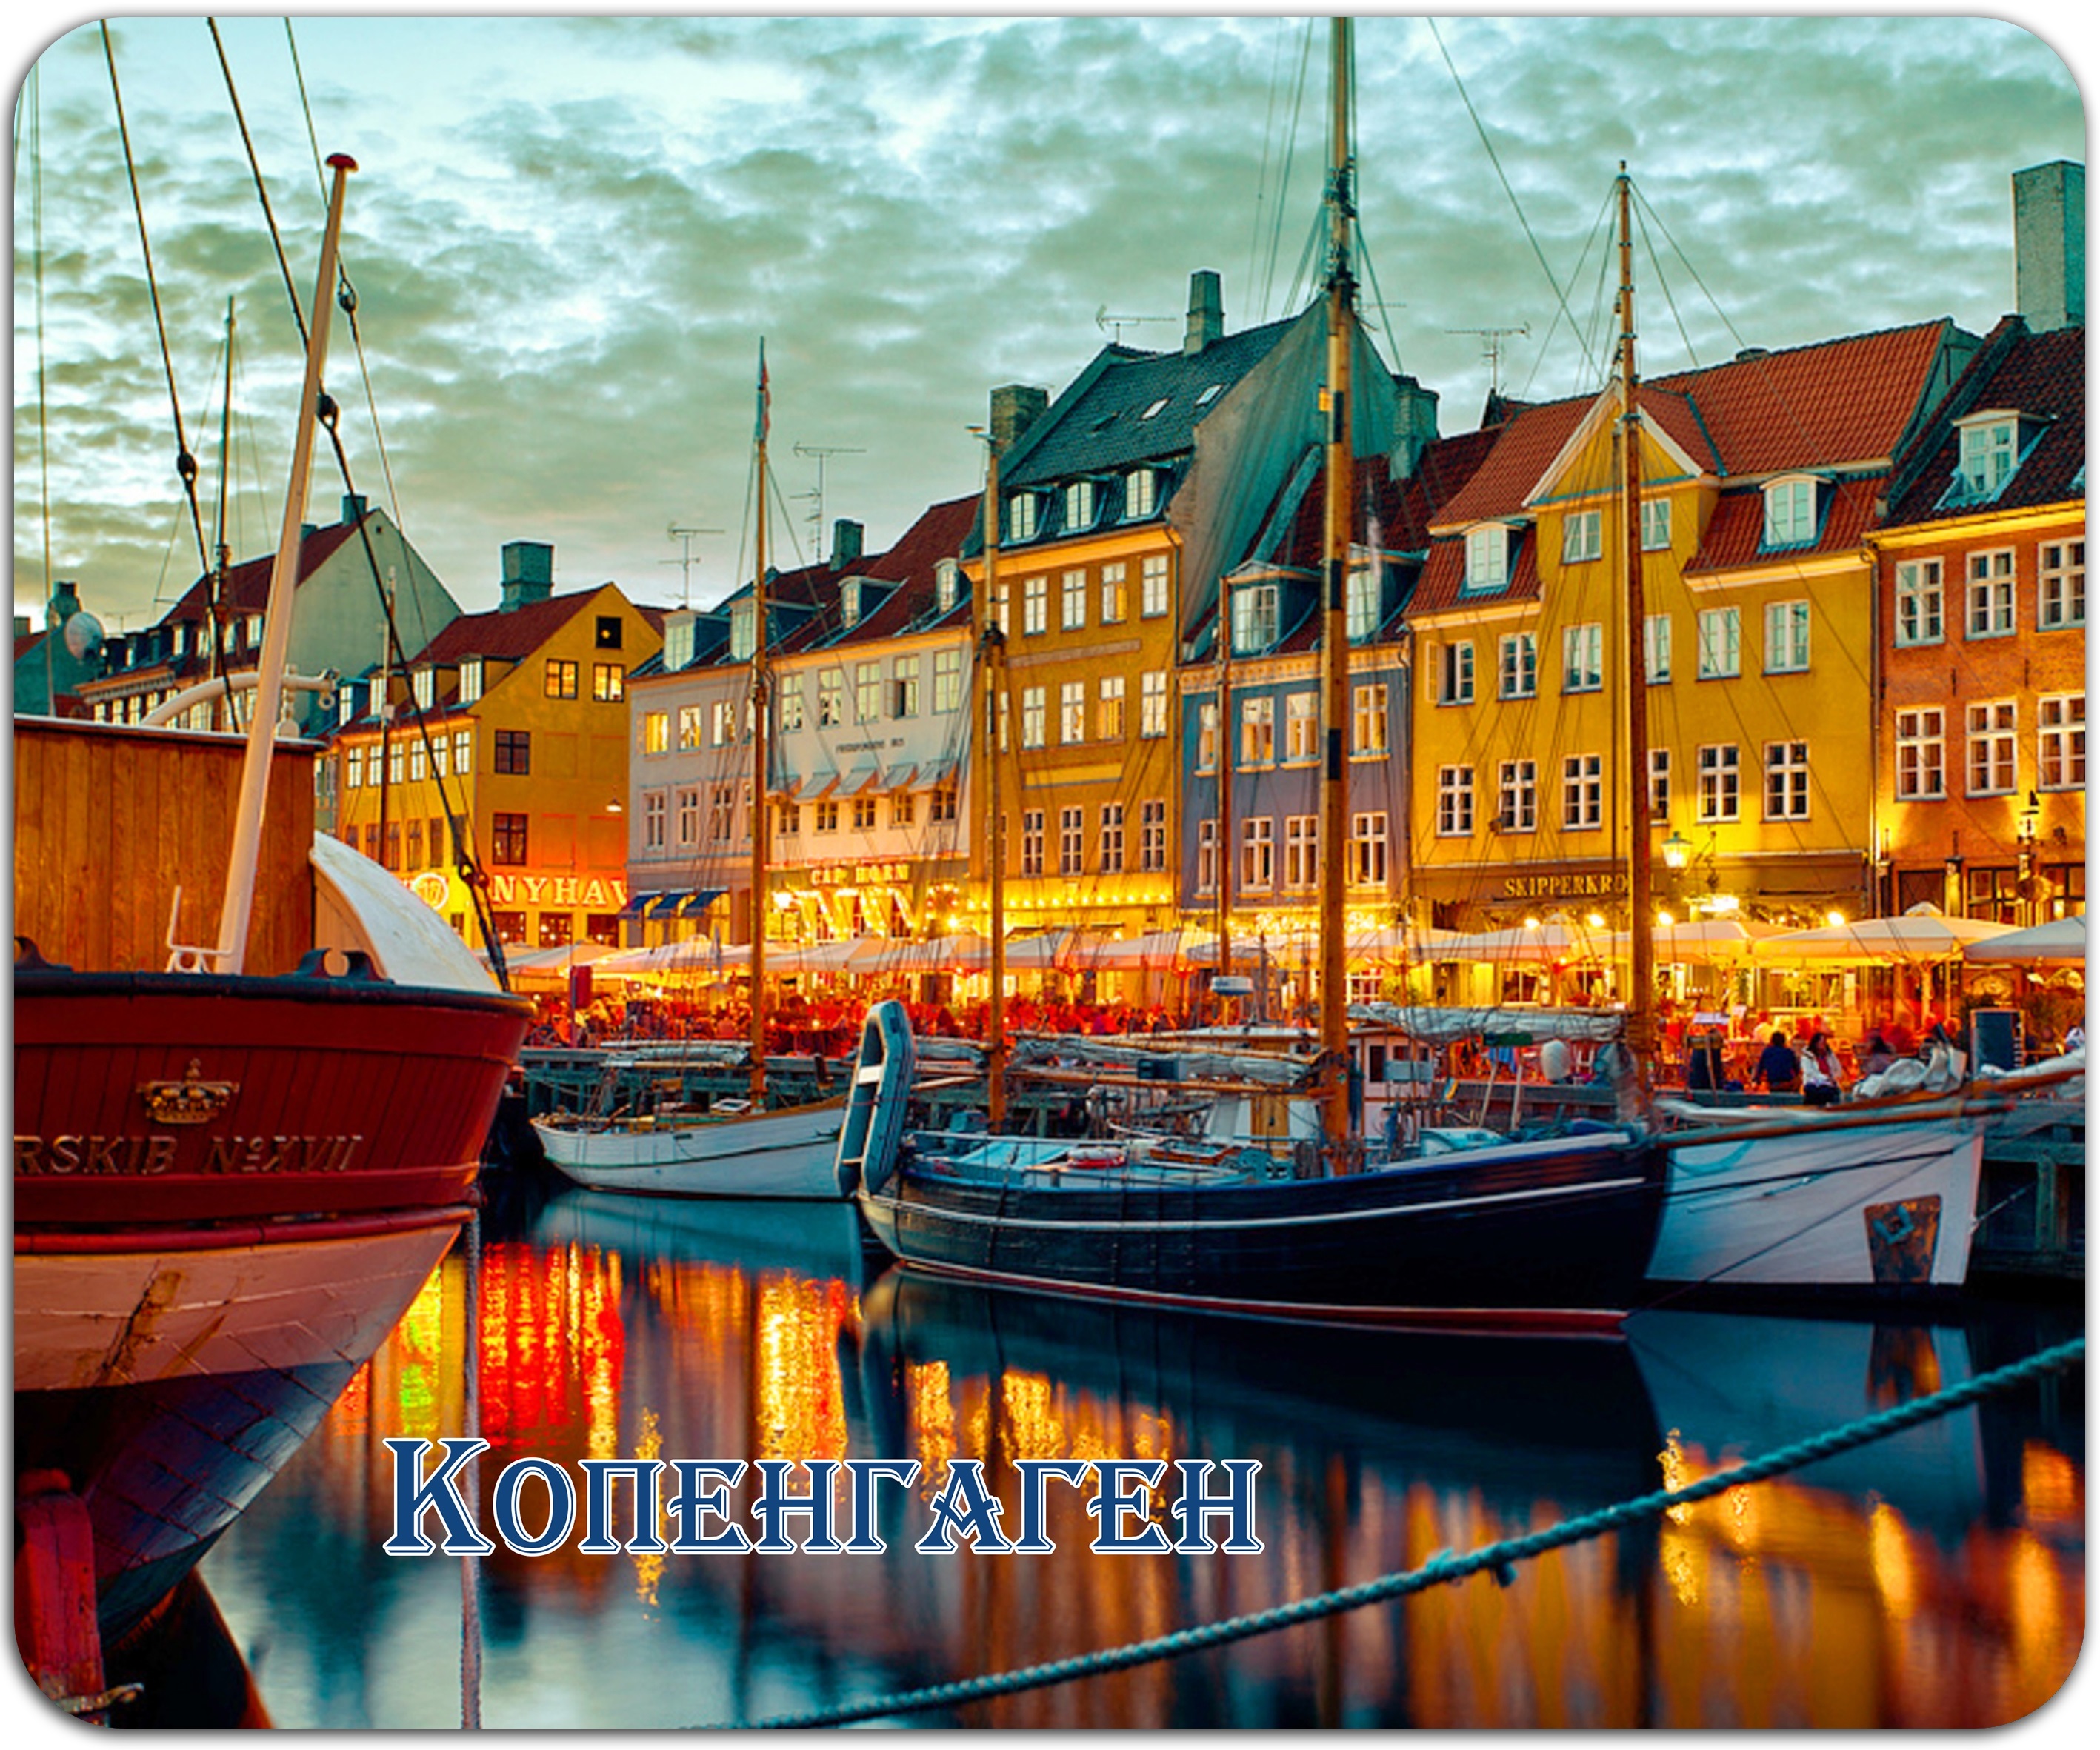 Сколько времени в дании. Канал Нюхавн в Дании. Набережная ньюхабен Копенгаген. Копенгаген Нюхавн Копенгаген набережная.